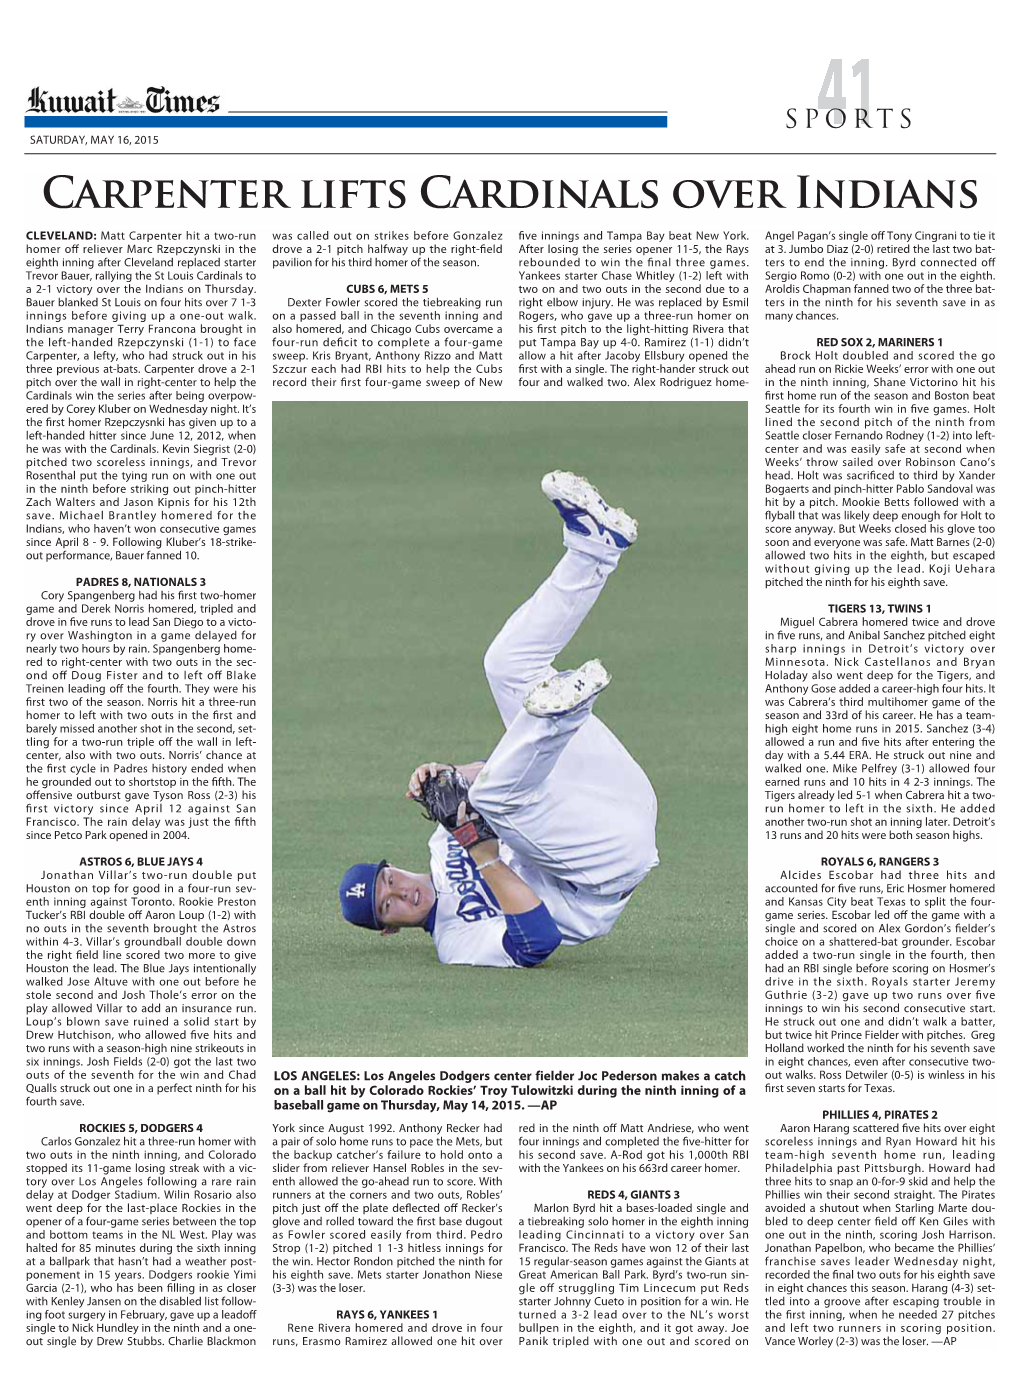 Carpenter Lifts Cardinals Over Indians